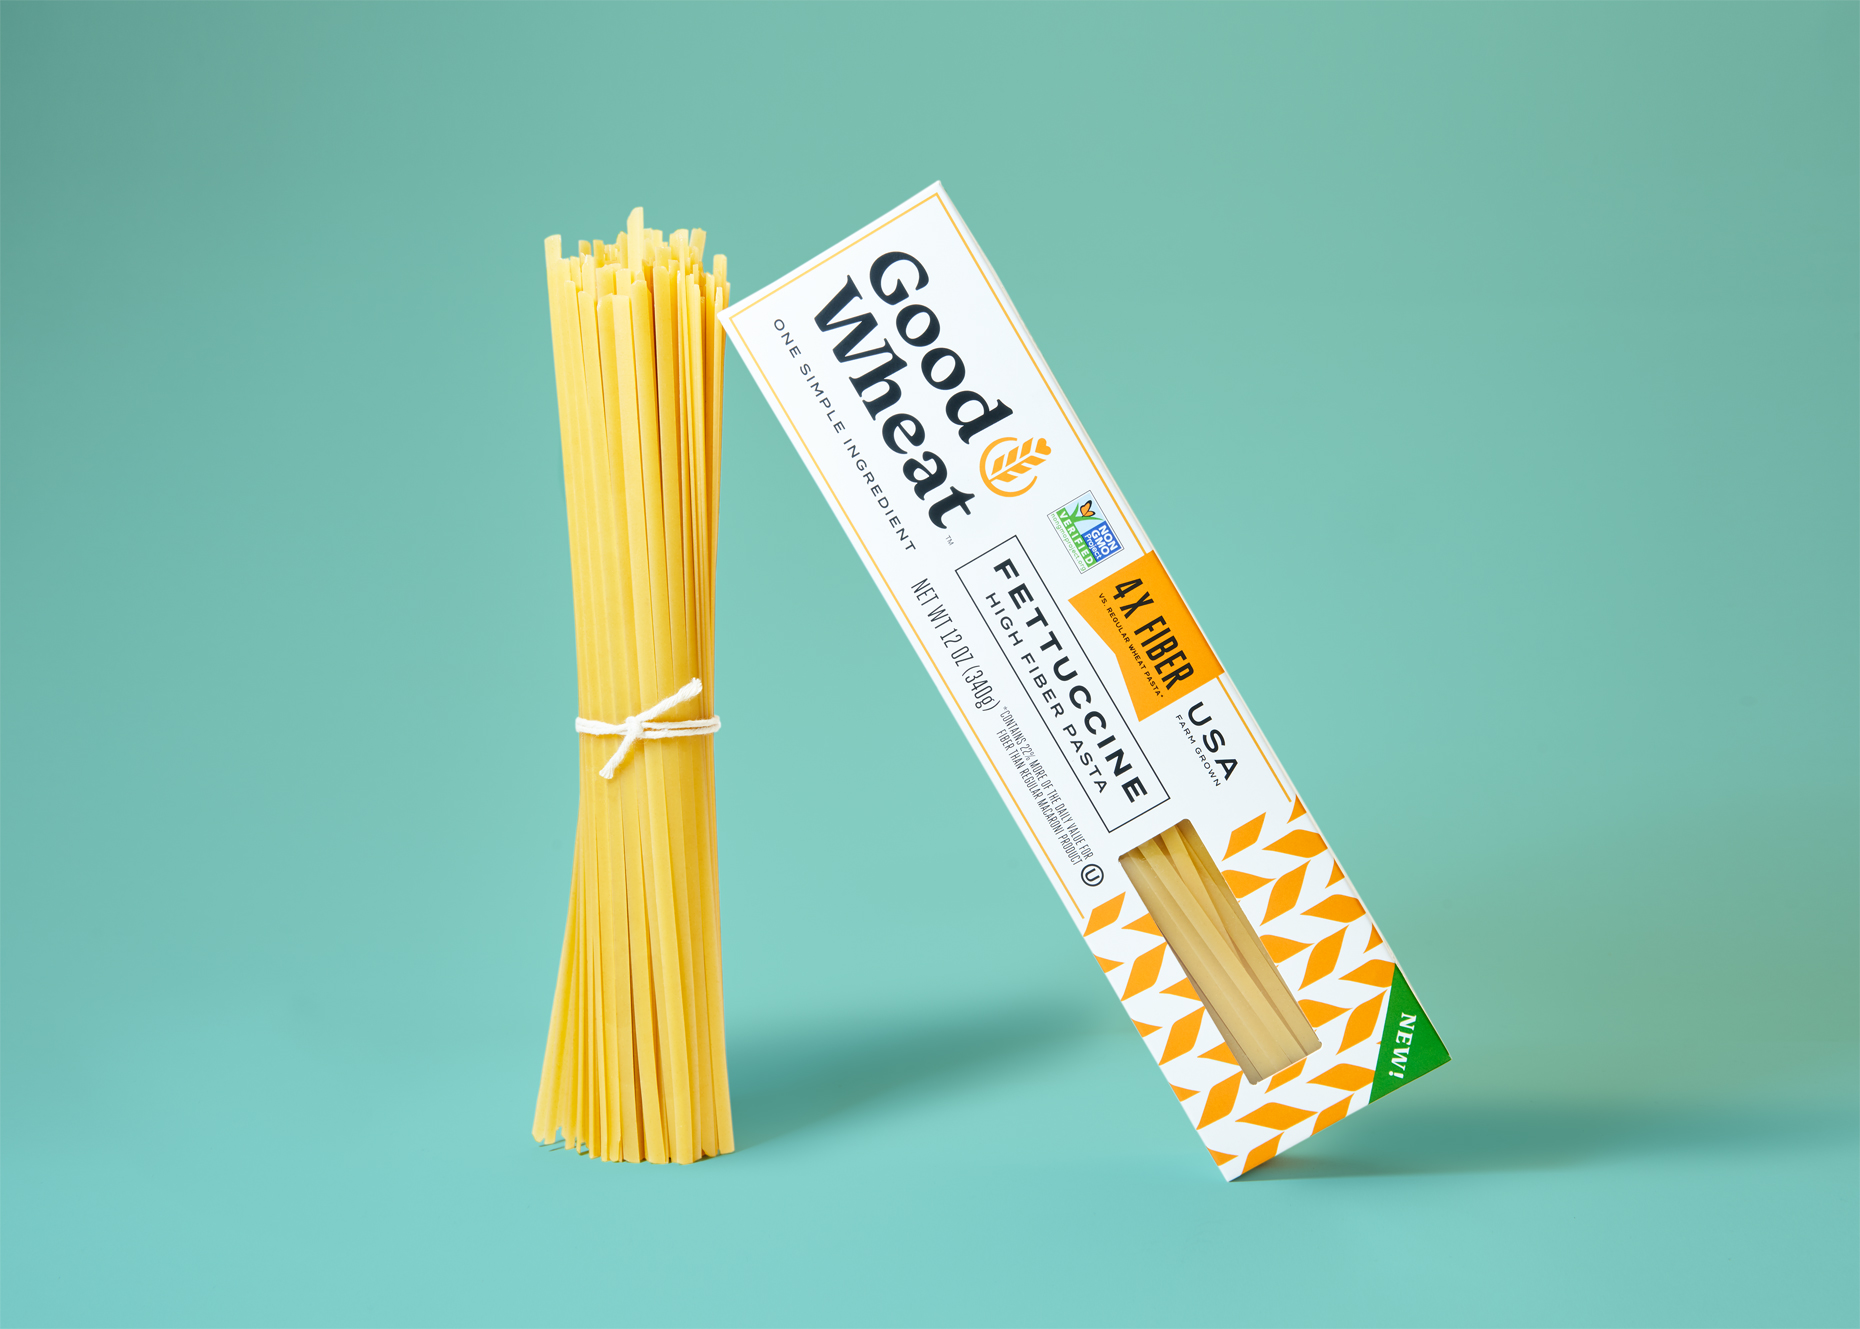 deepi-ahluwalia-goodwheat-pasta-box-fettuccine-web